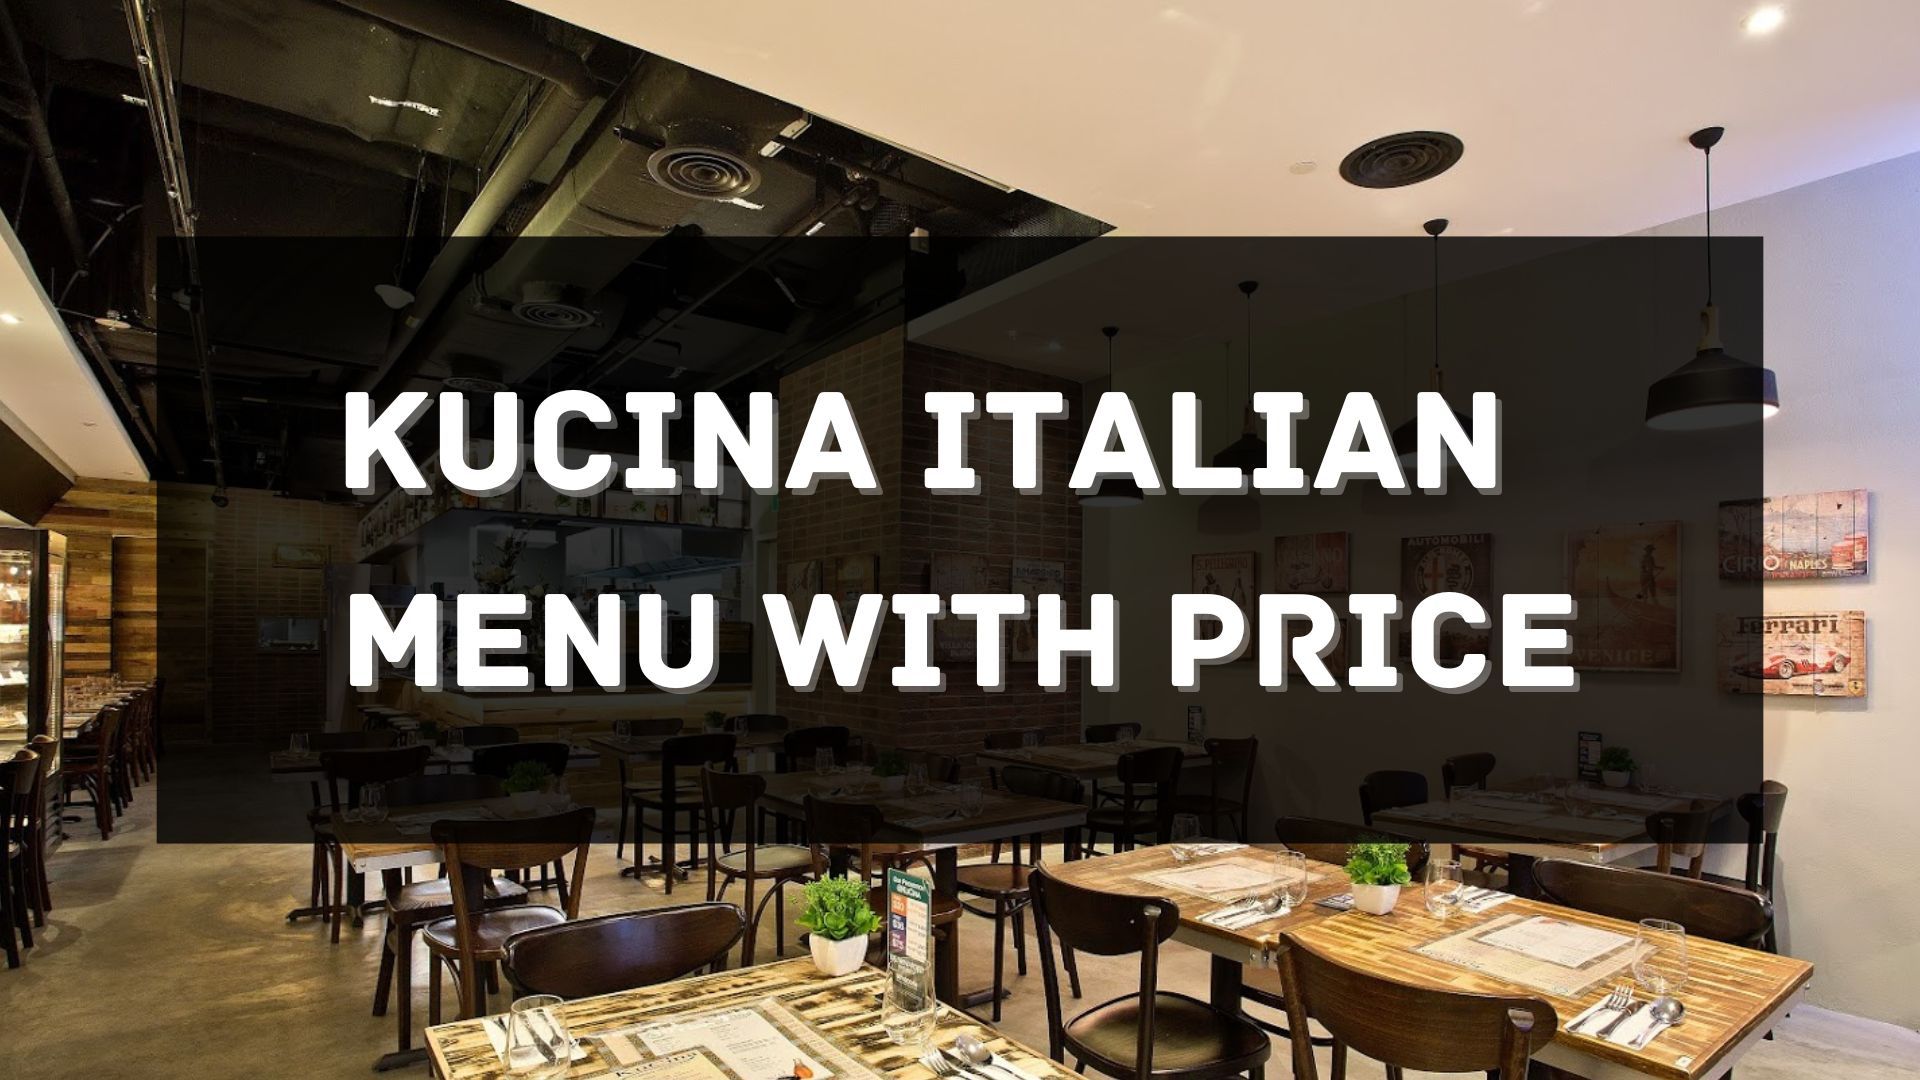 kucina italian restaurant menu with price singapore